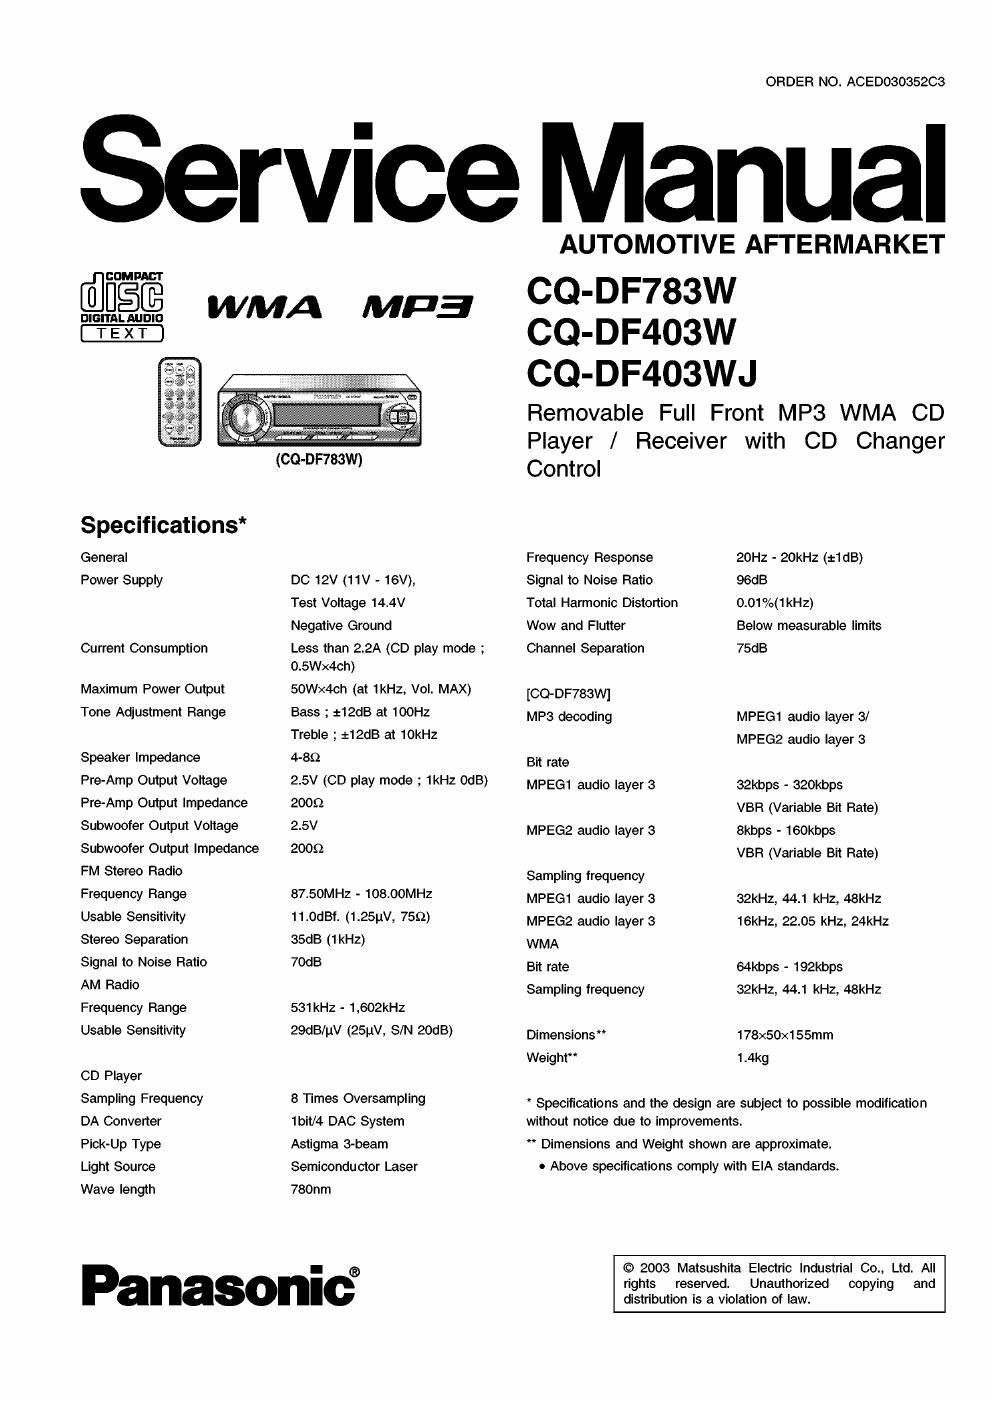 panasonic cq df 403 w service manual